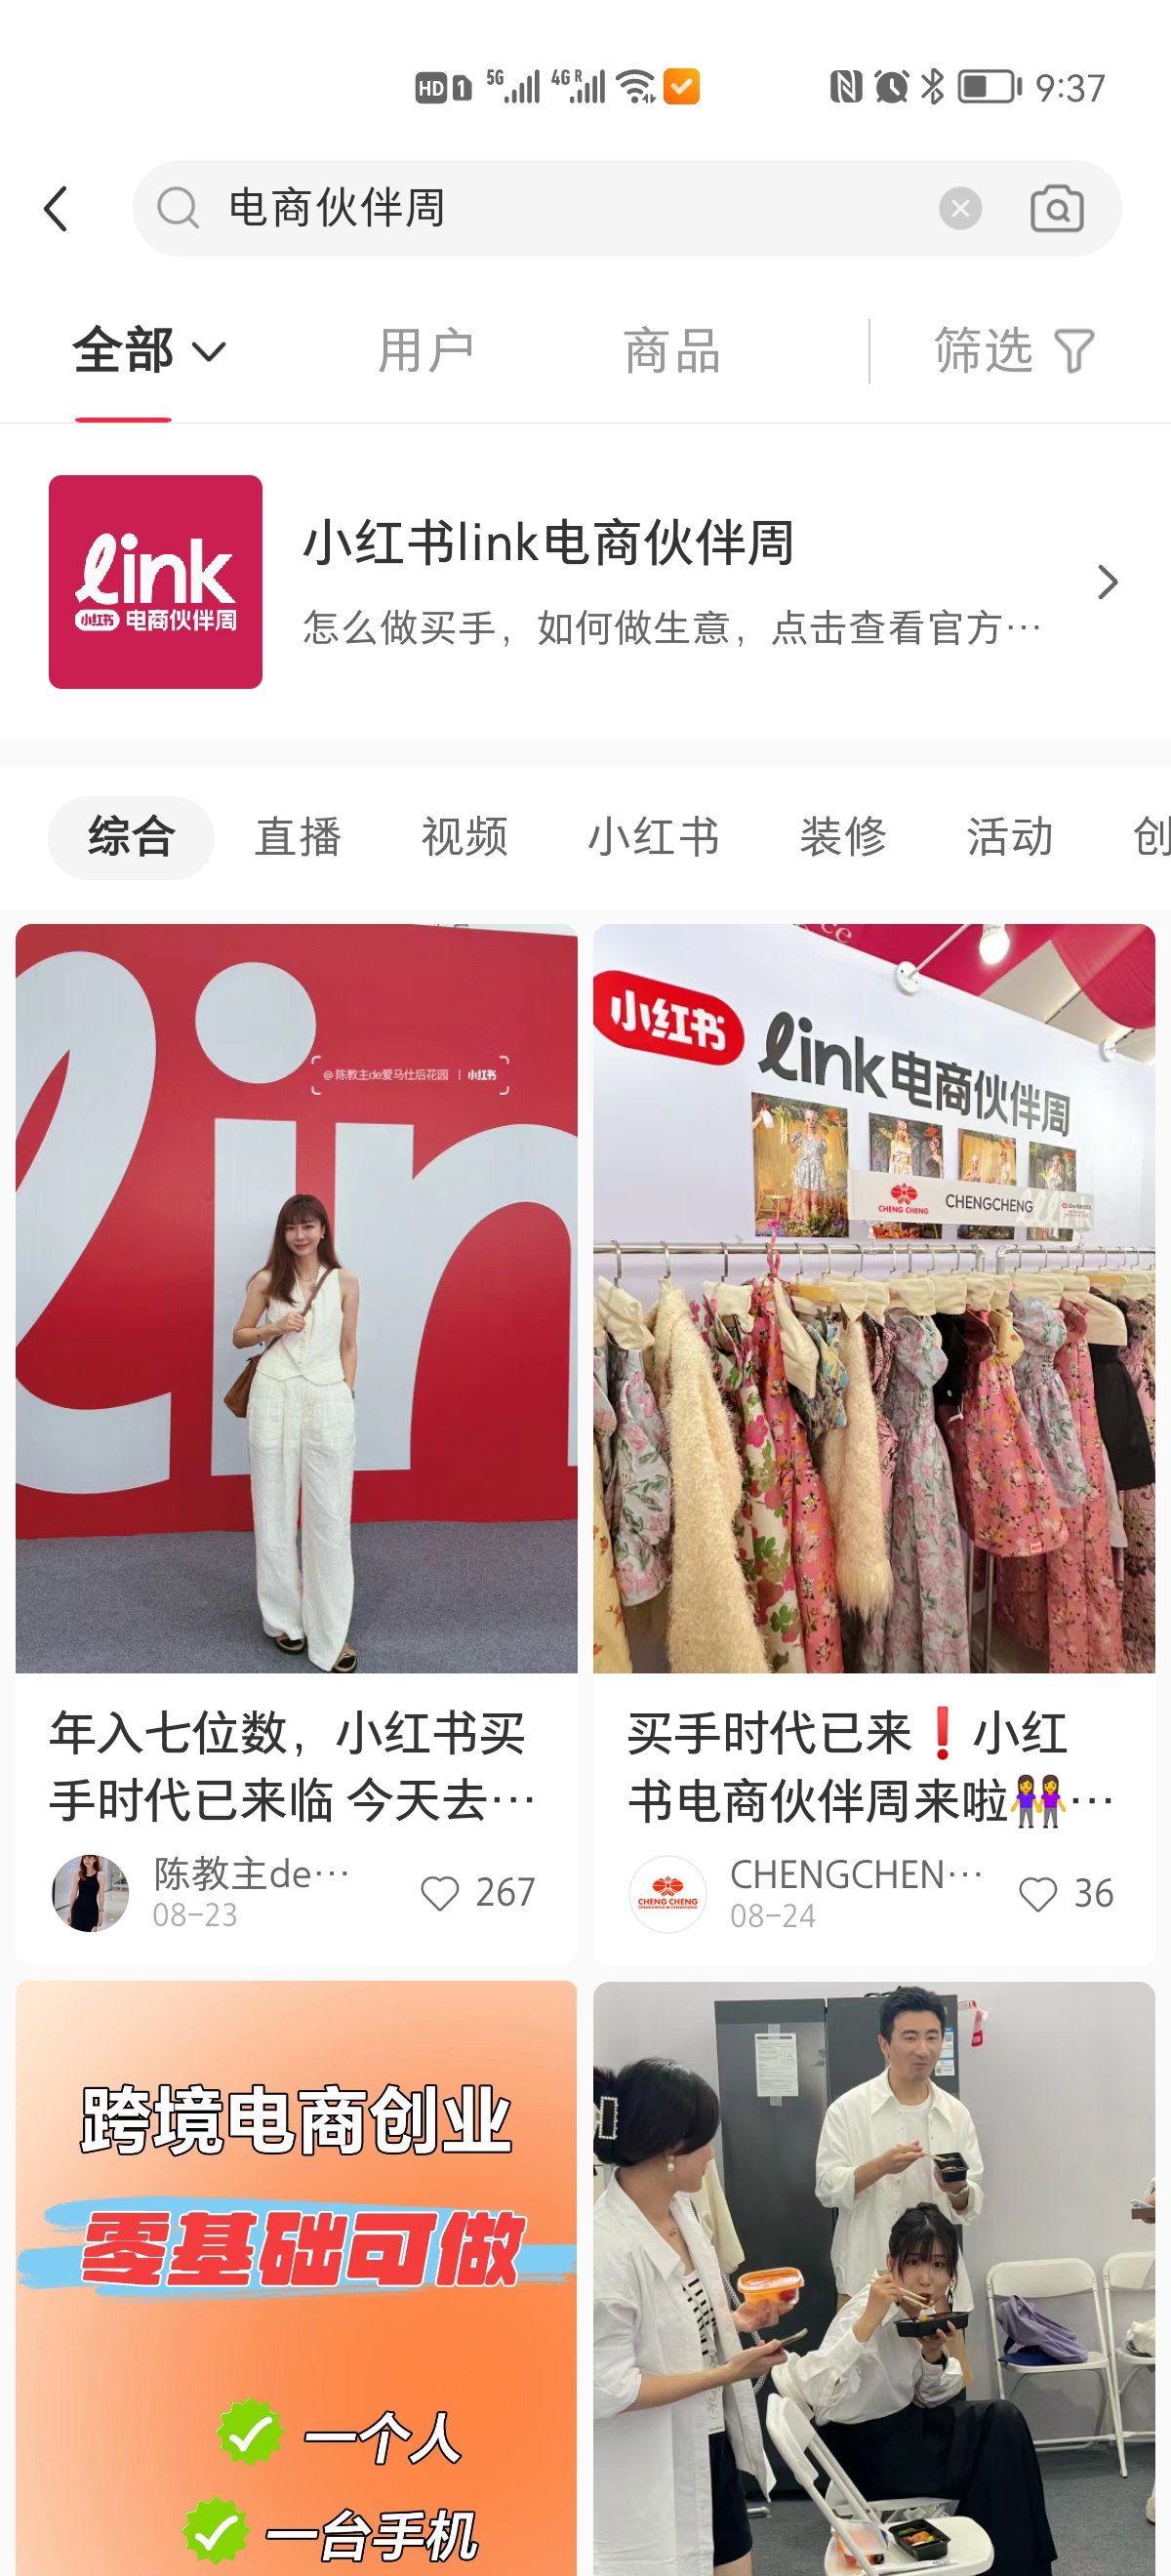 Search Results of 'E-Commerce Partner Week' on Little Red Book (Xiaohongshu).jpg